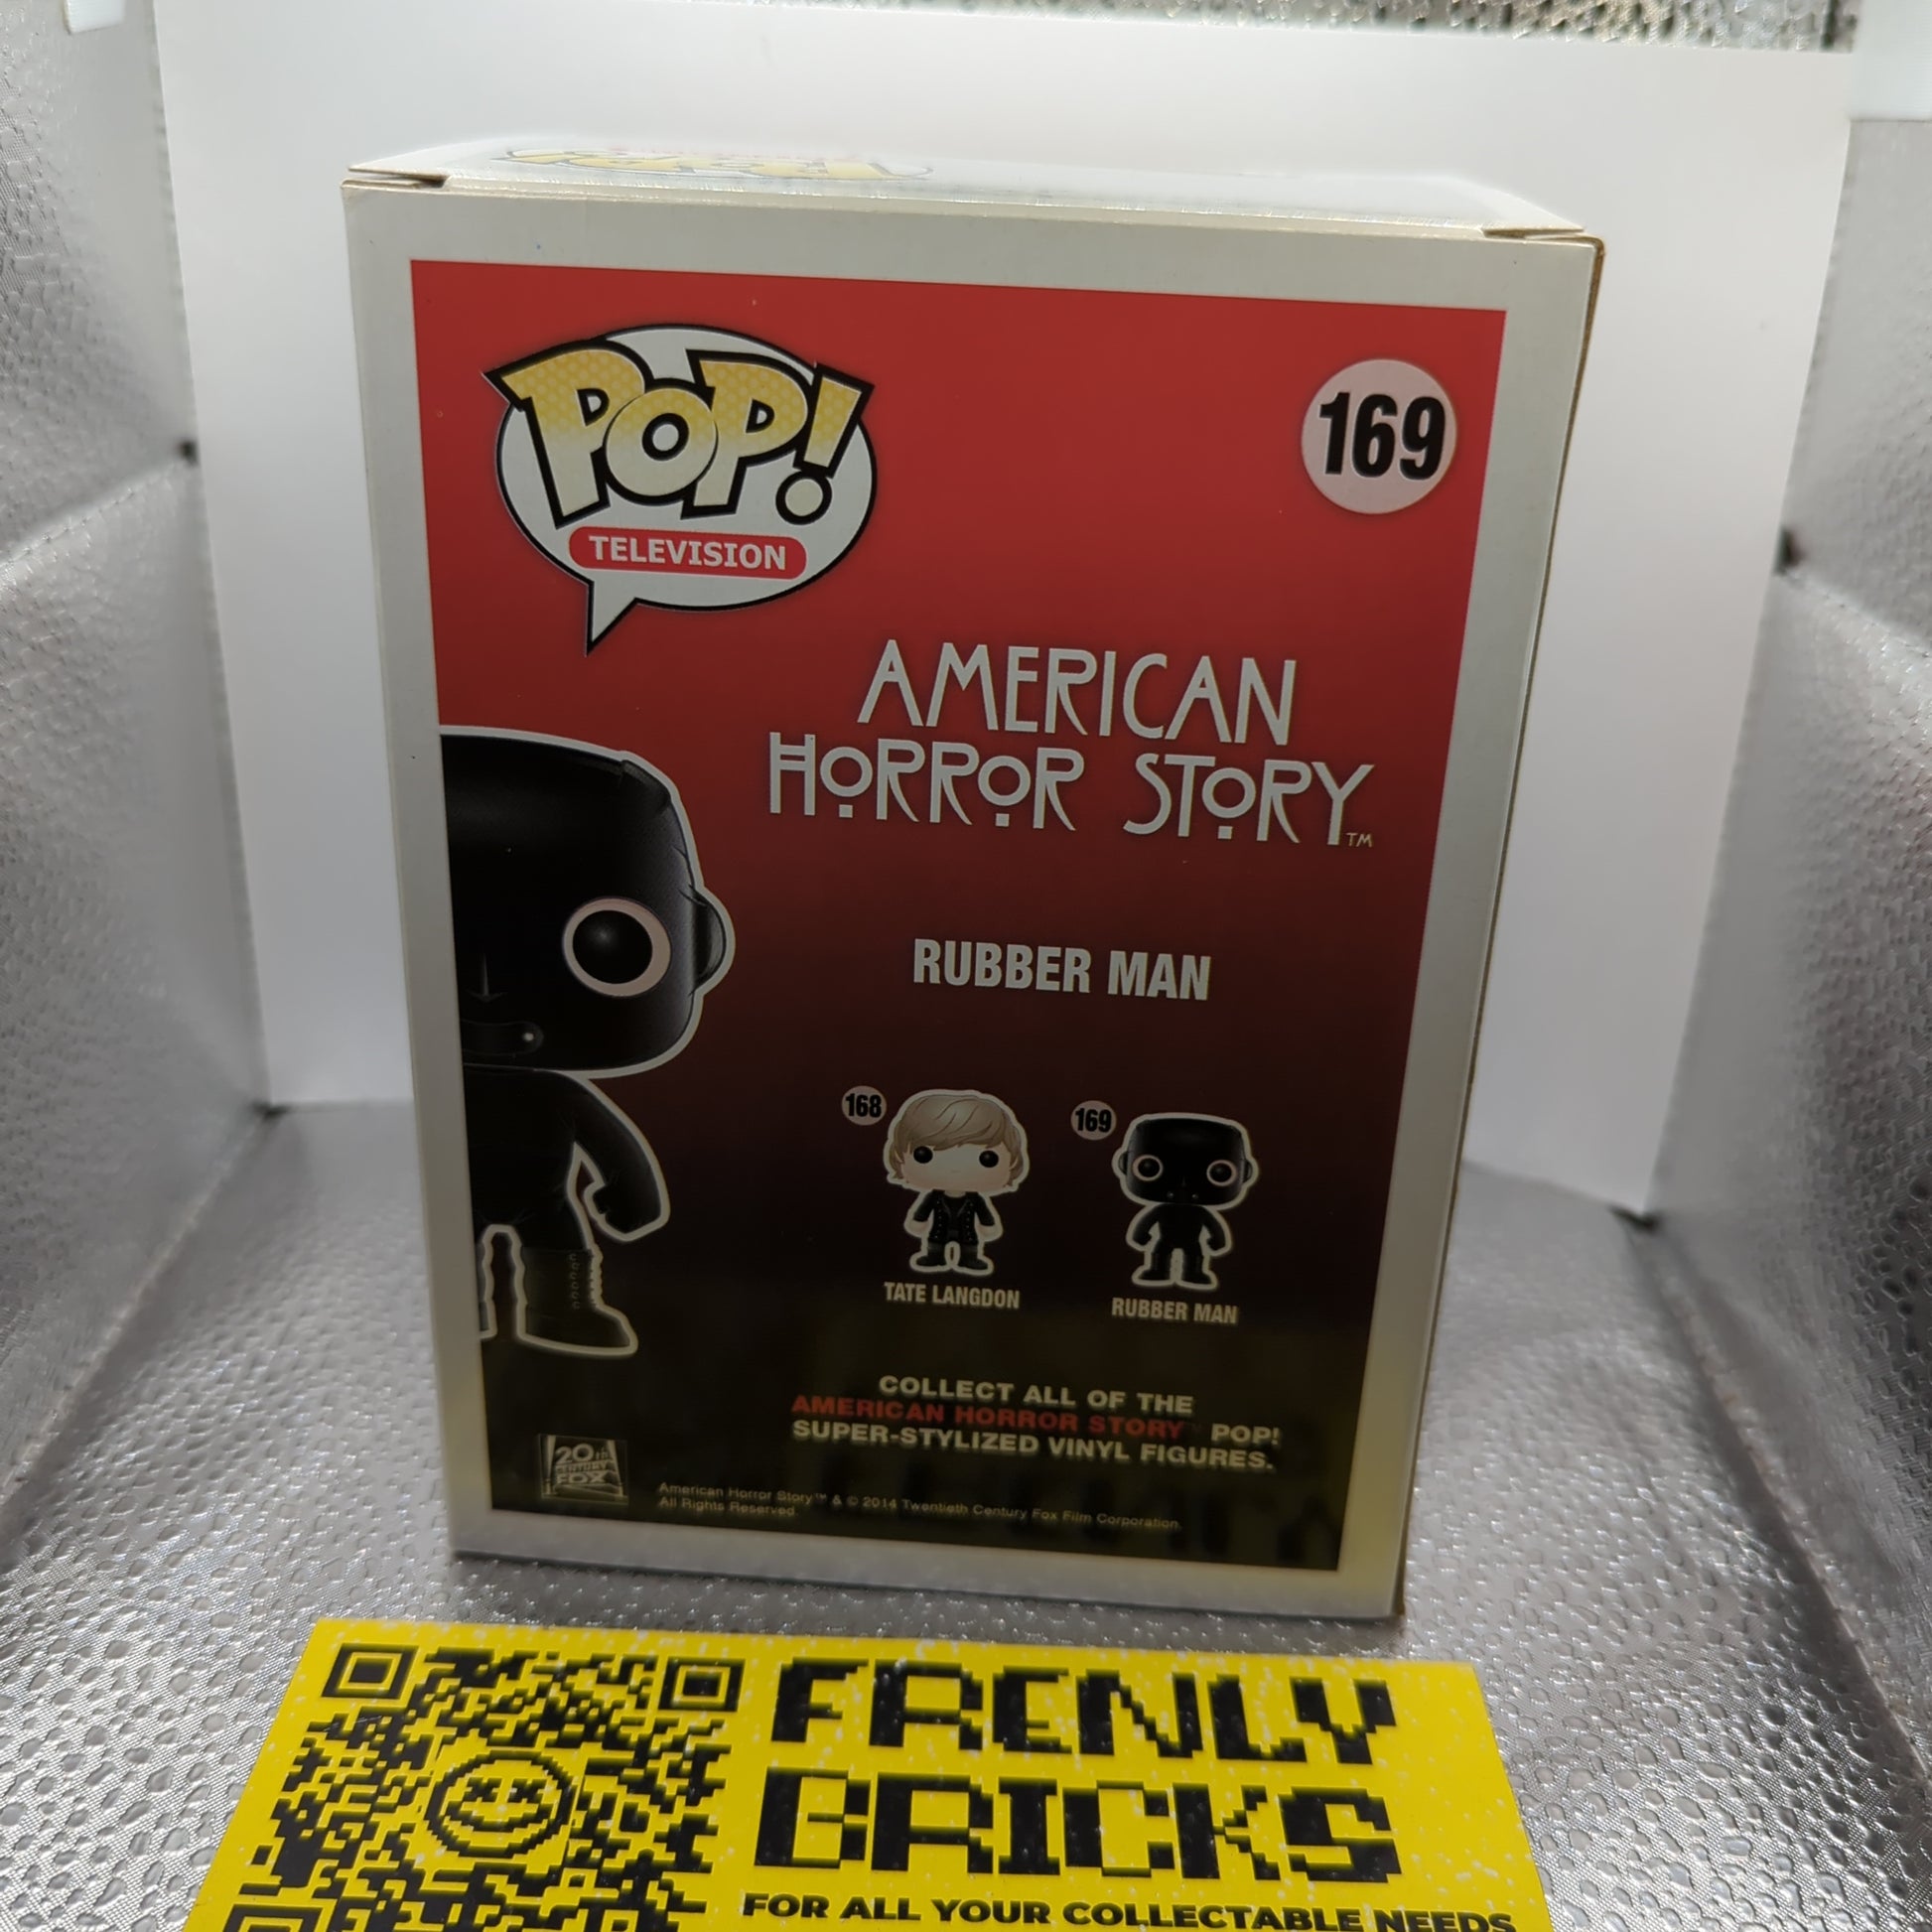 Funko Pop! Television American Horror Story Rubber Man #169 Vinyl Figure In Box FRENLY BRICKS - Open 7 Days